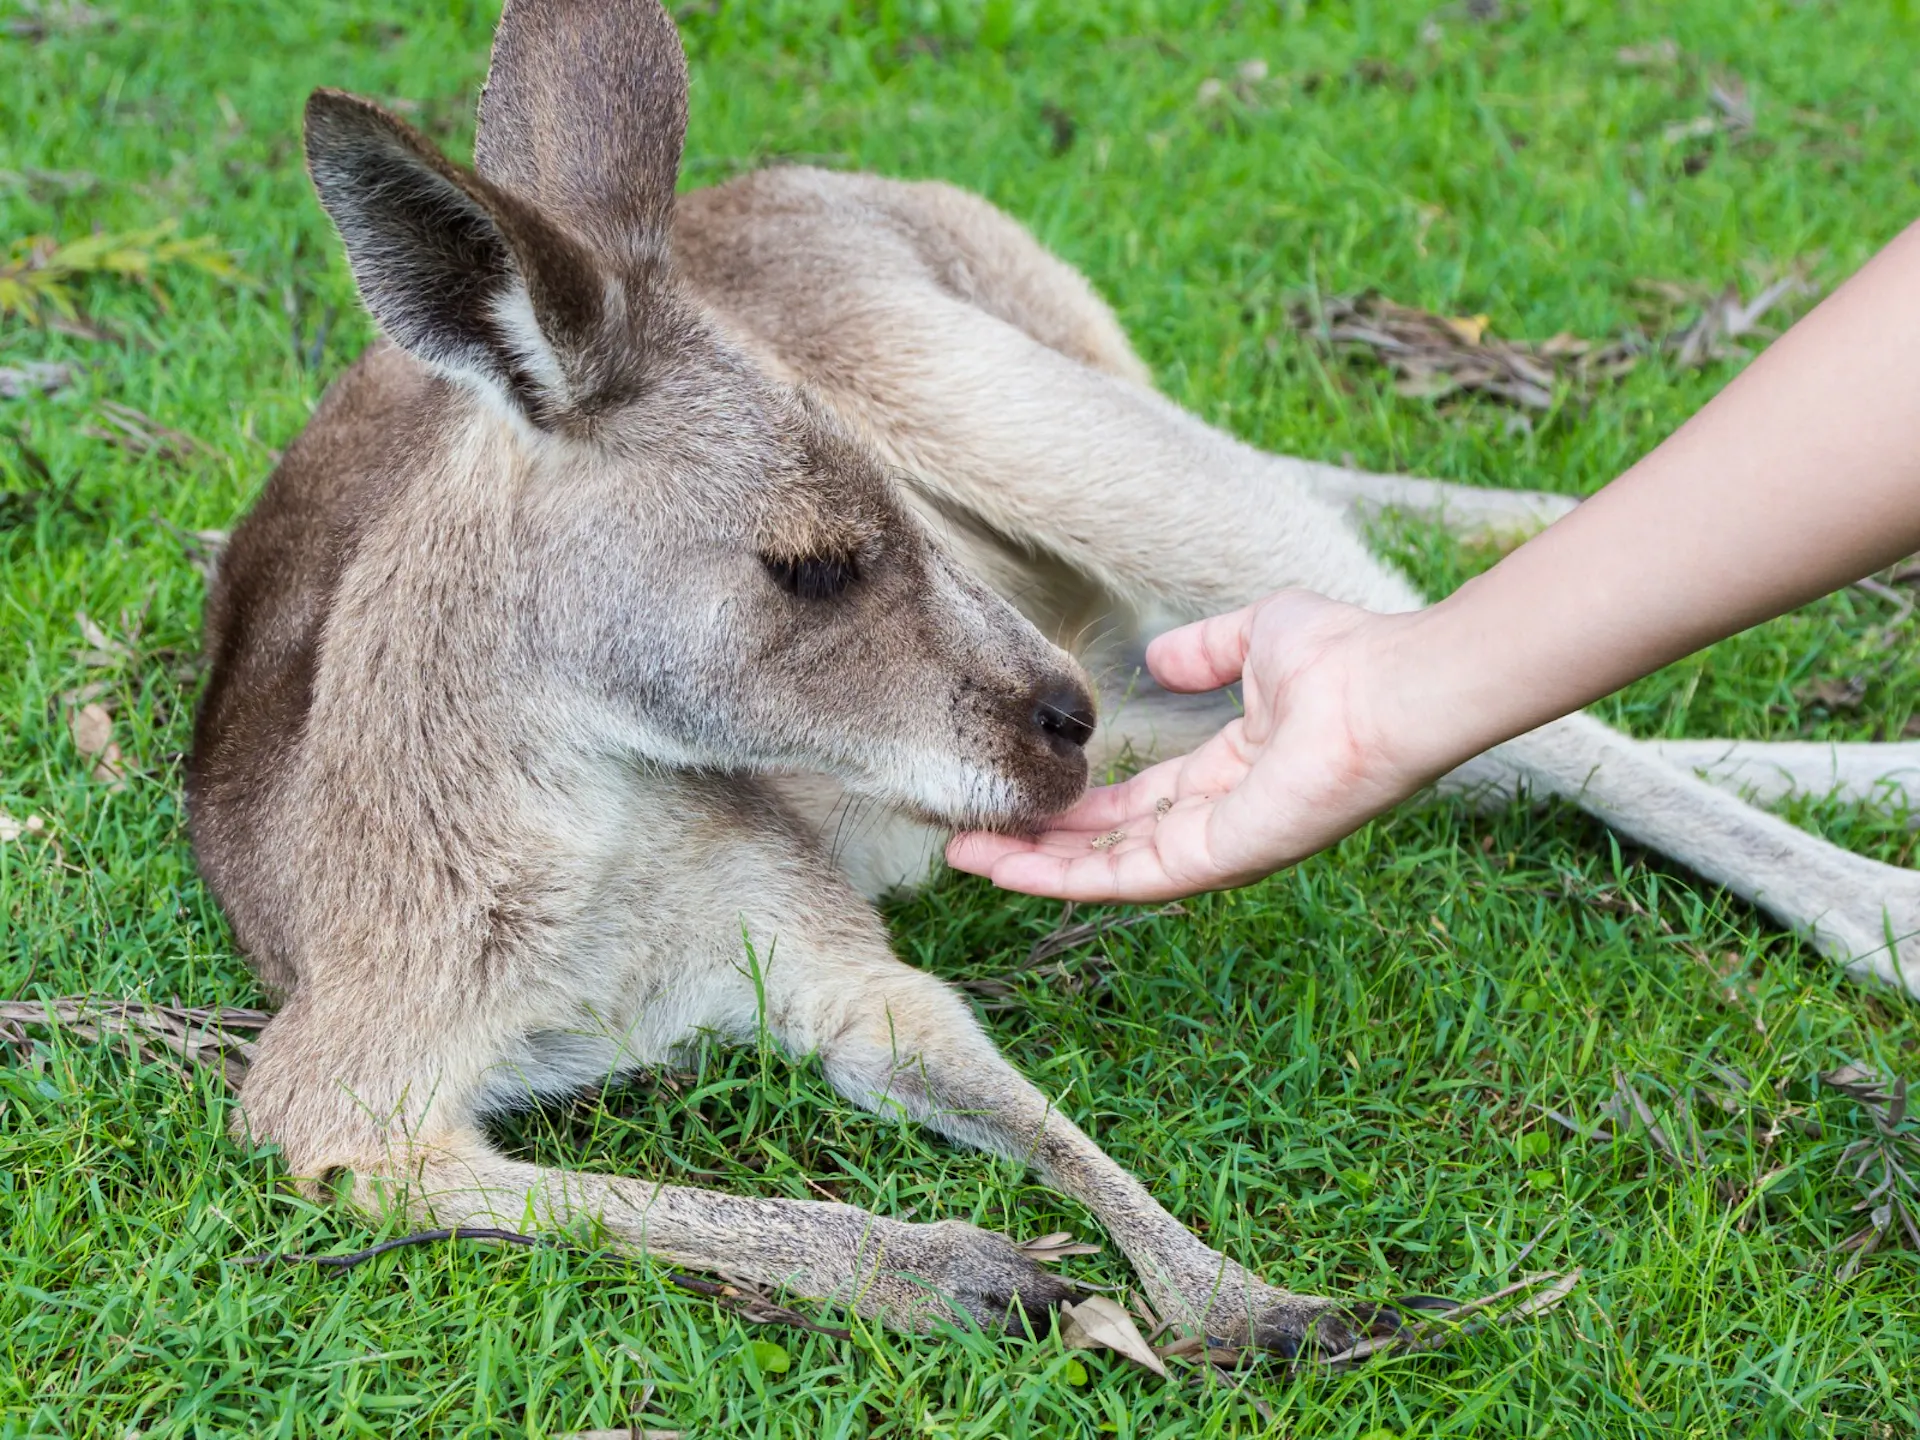 Kangaroo at Australia Zoo